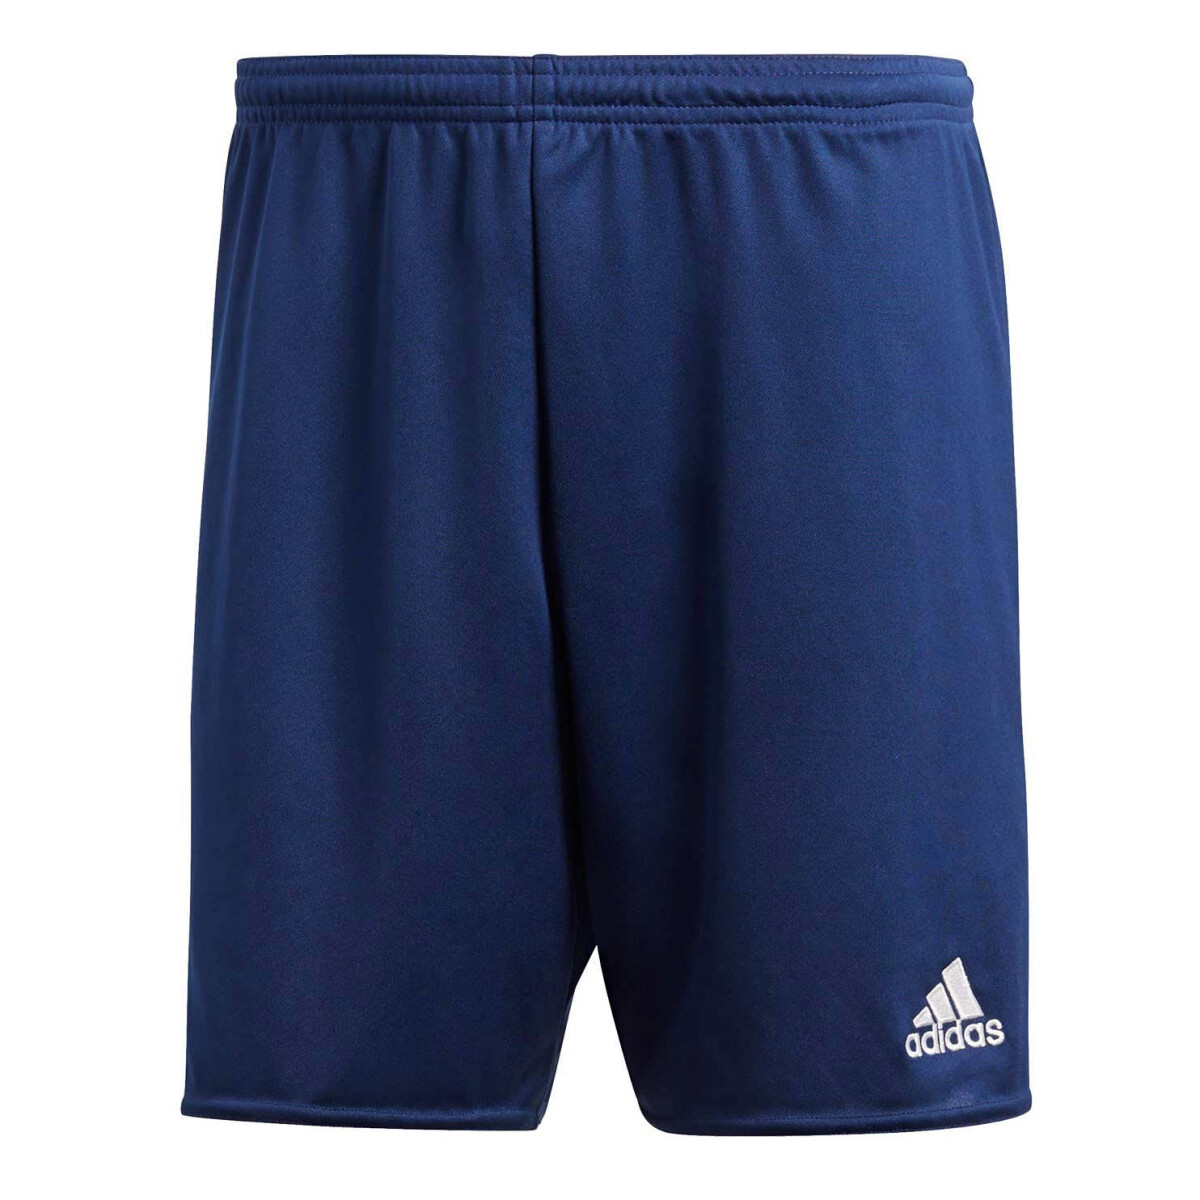 Short Parma 16 Adidas - Azul 